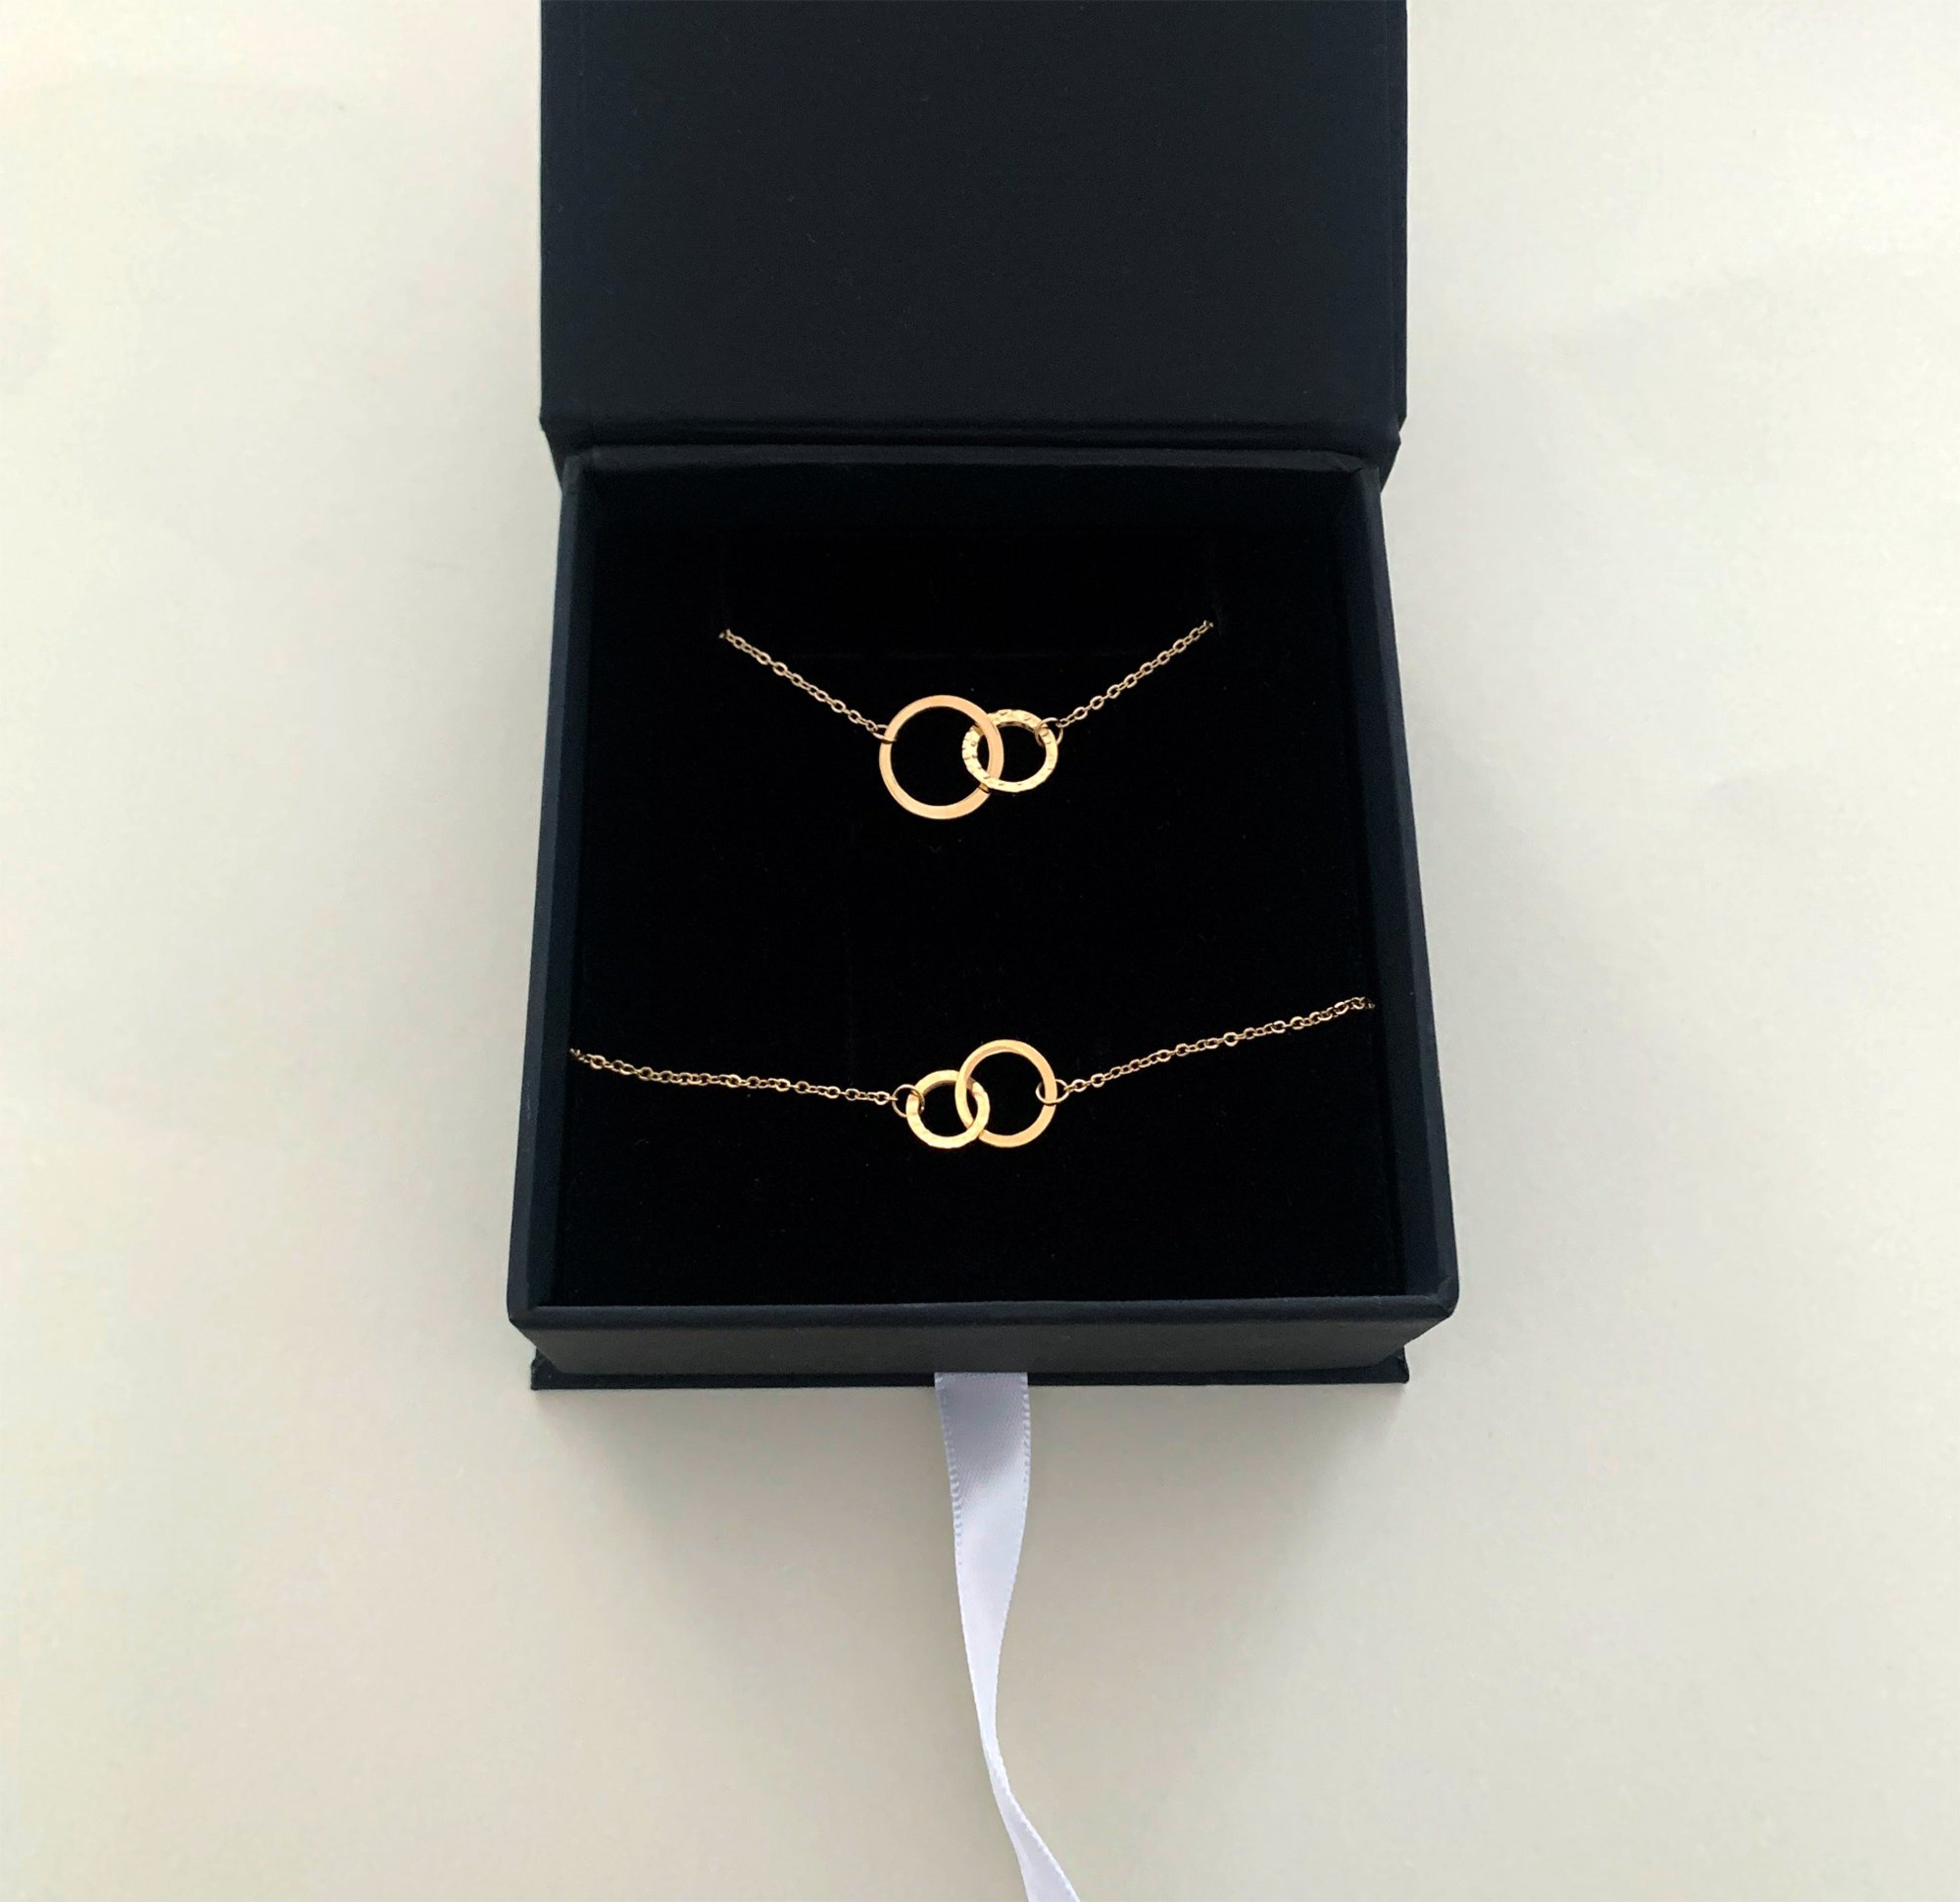 dainty gold unity link bracelet and necklace set waterproof jewelry tarnish free in jewelry box